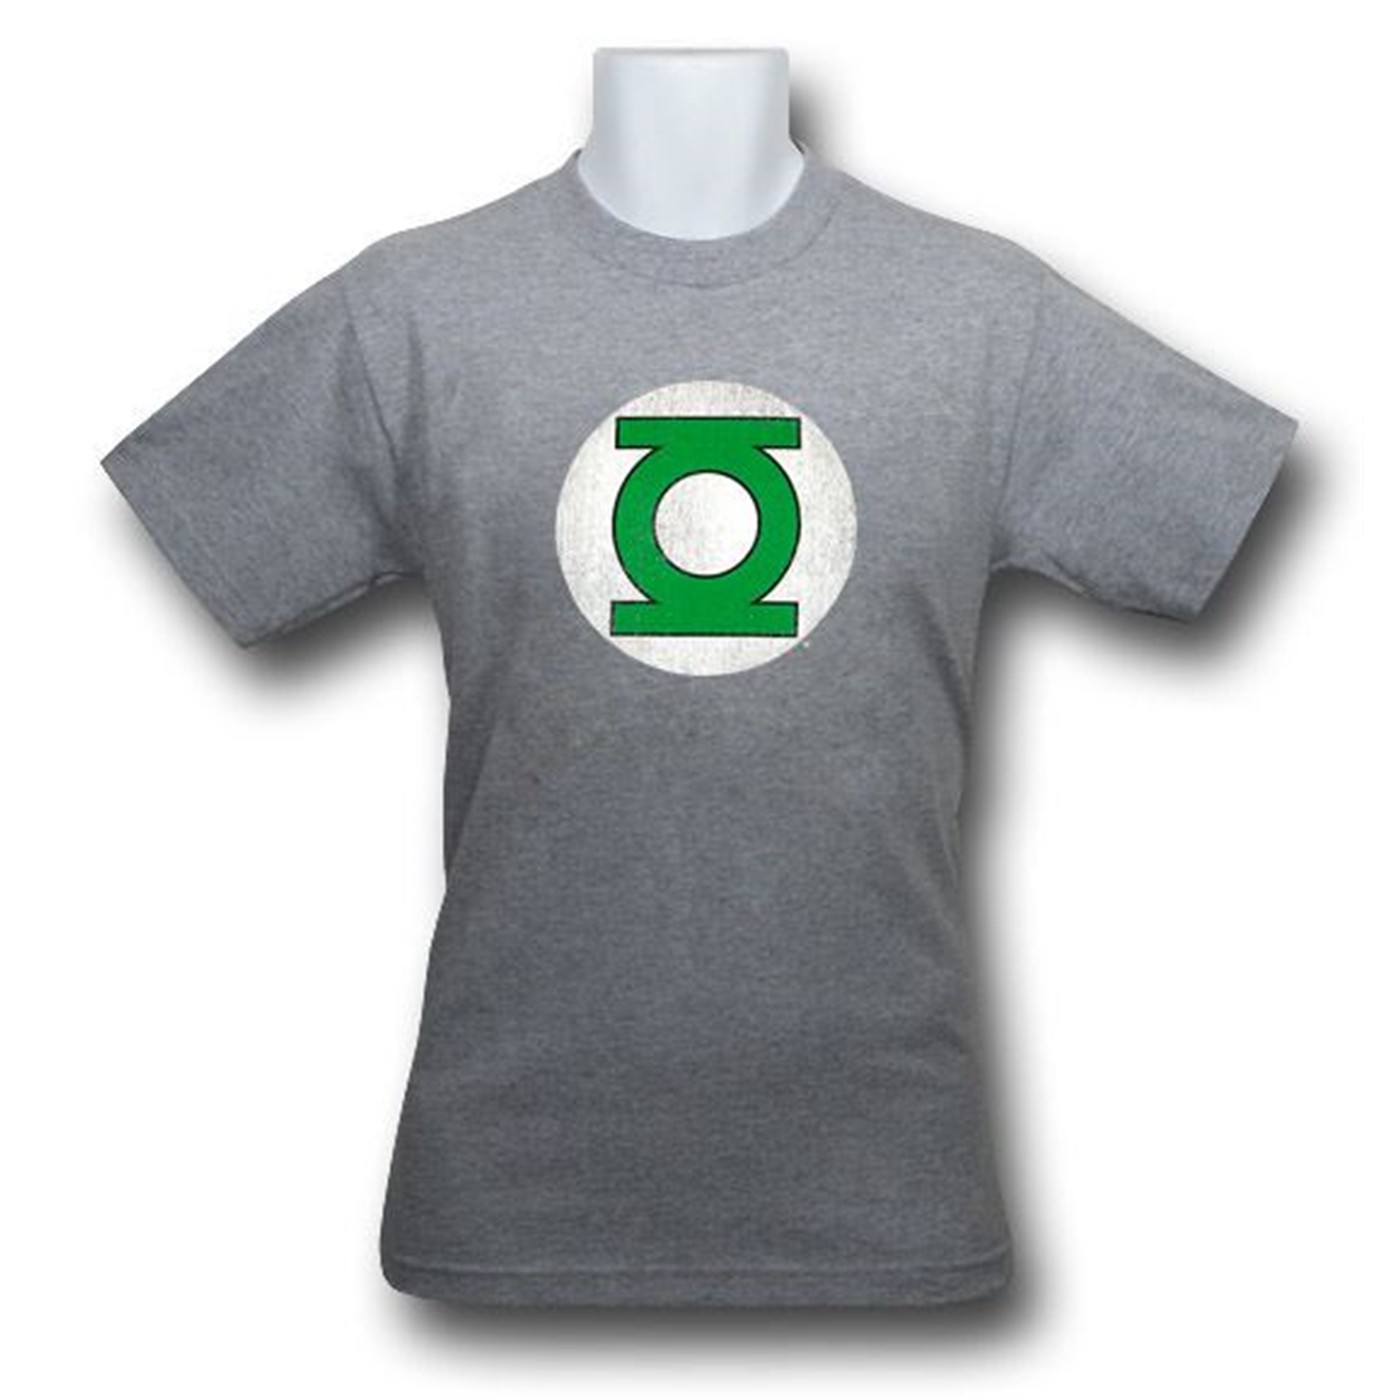 Green Lantern Distressed Heather Grey T-Shirt